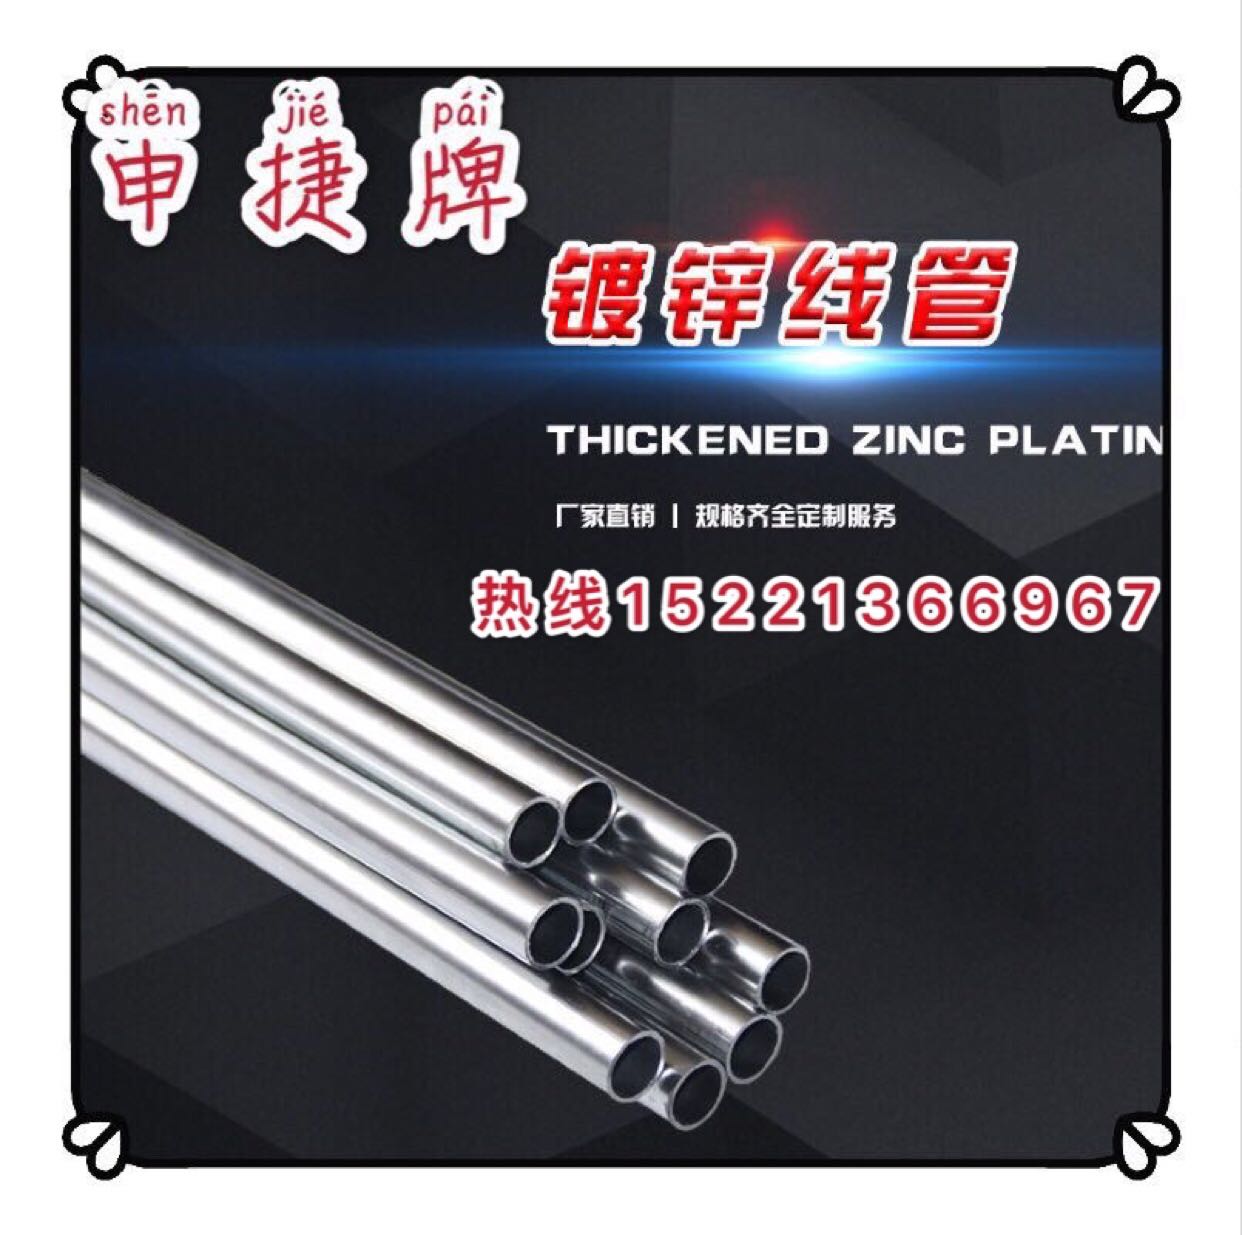 Shanghai Shenjie Electric Wire Tube KBG JDG galvanized tube Hangzhou Tianyi